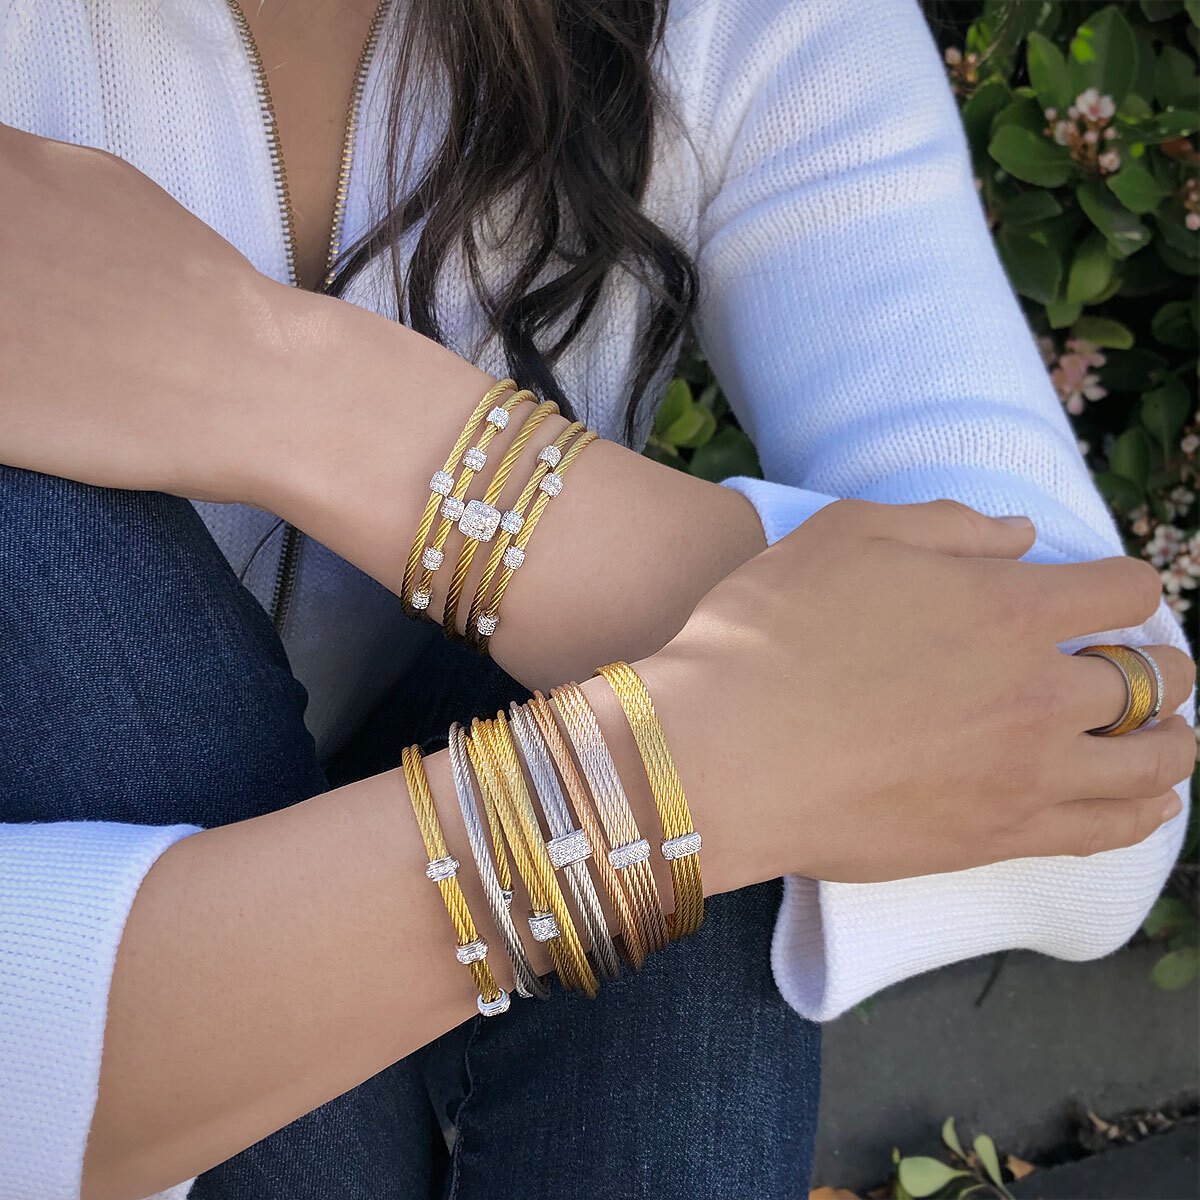 Discover more than 84 gold stackable bracelets super hot